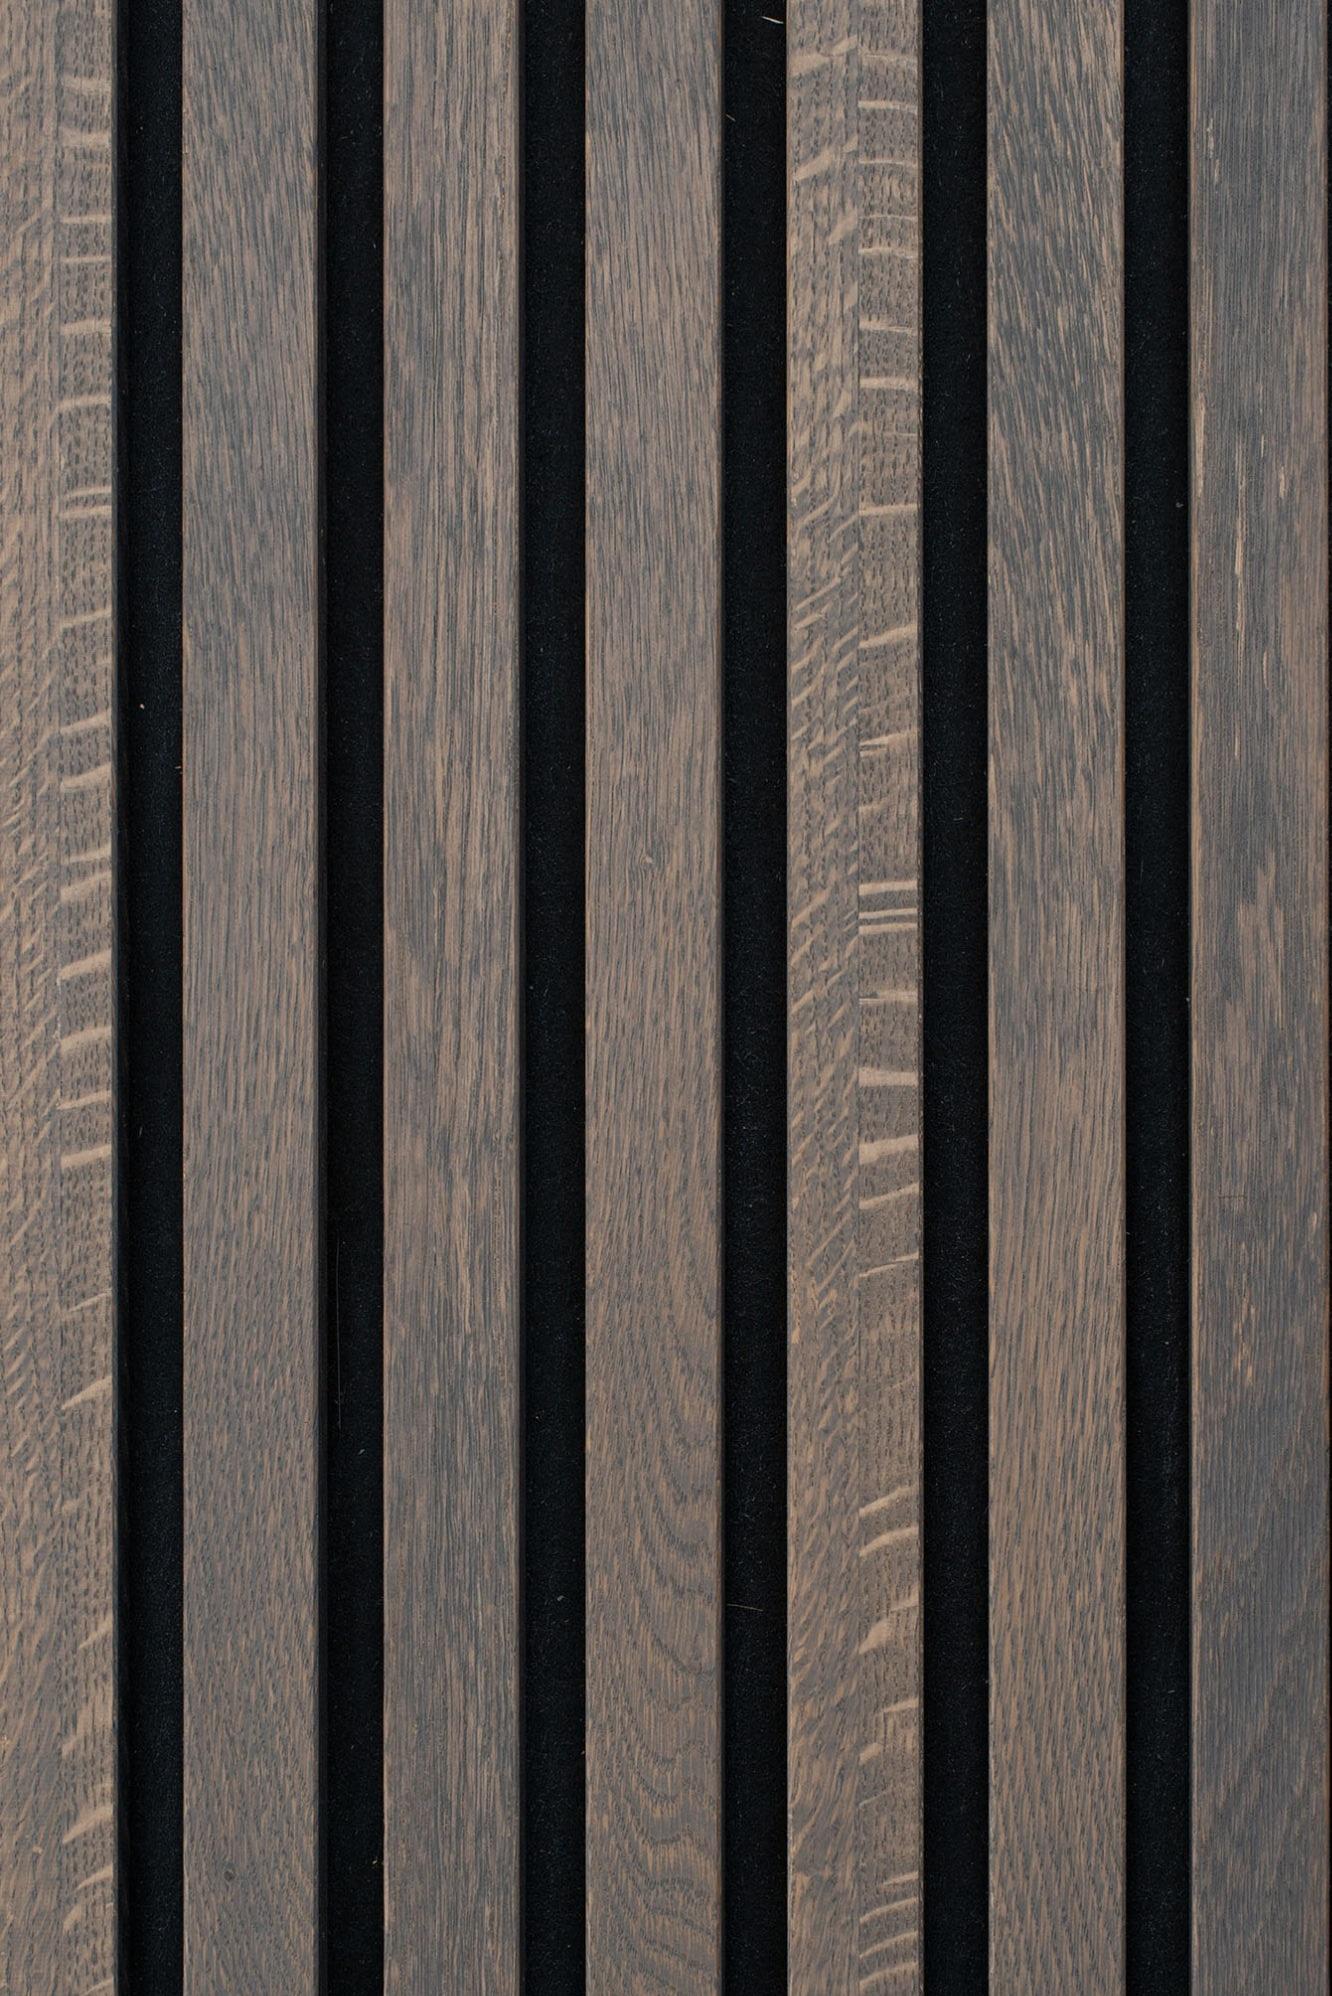 Nawood Castle Grey 300x60x2,2 akustični panel sa drvenim letvicama 1.80